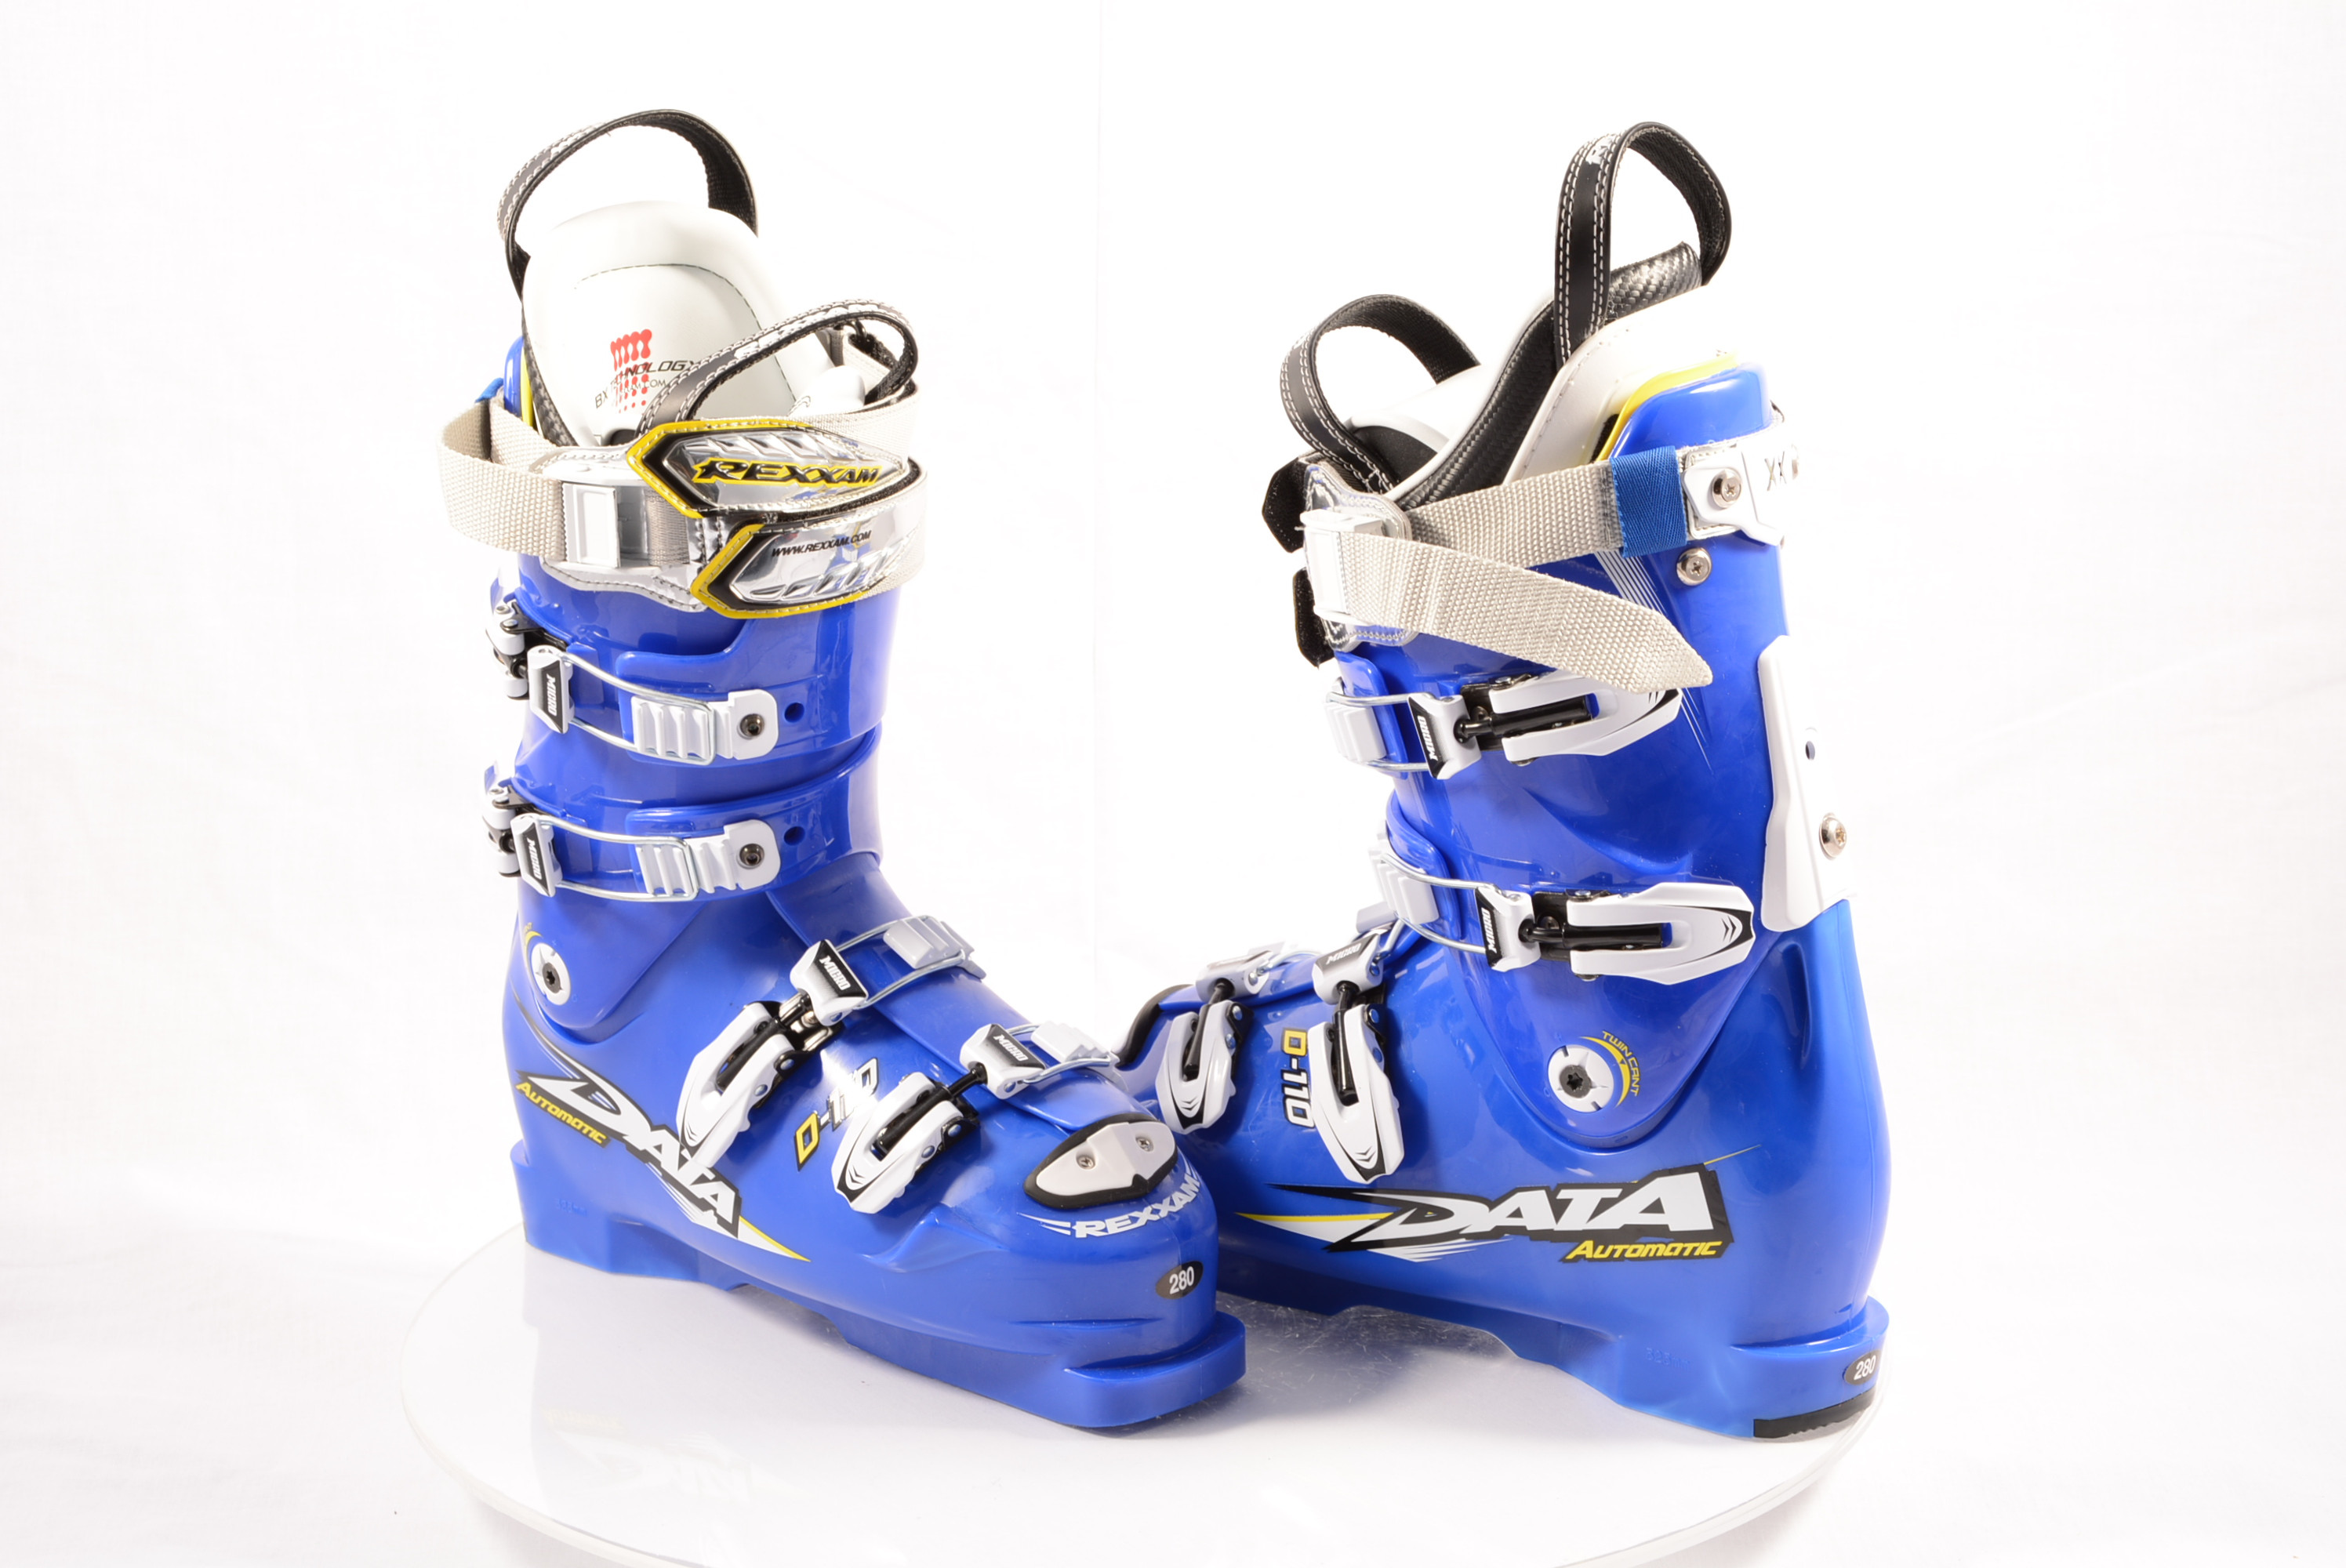 316 mm ski boot size